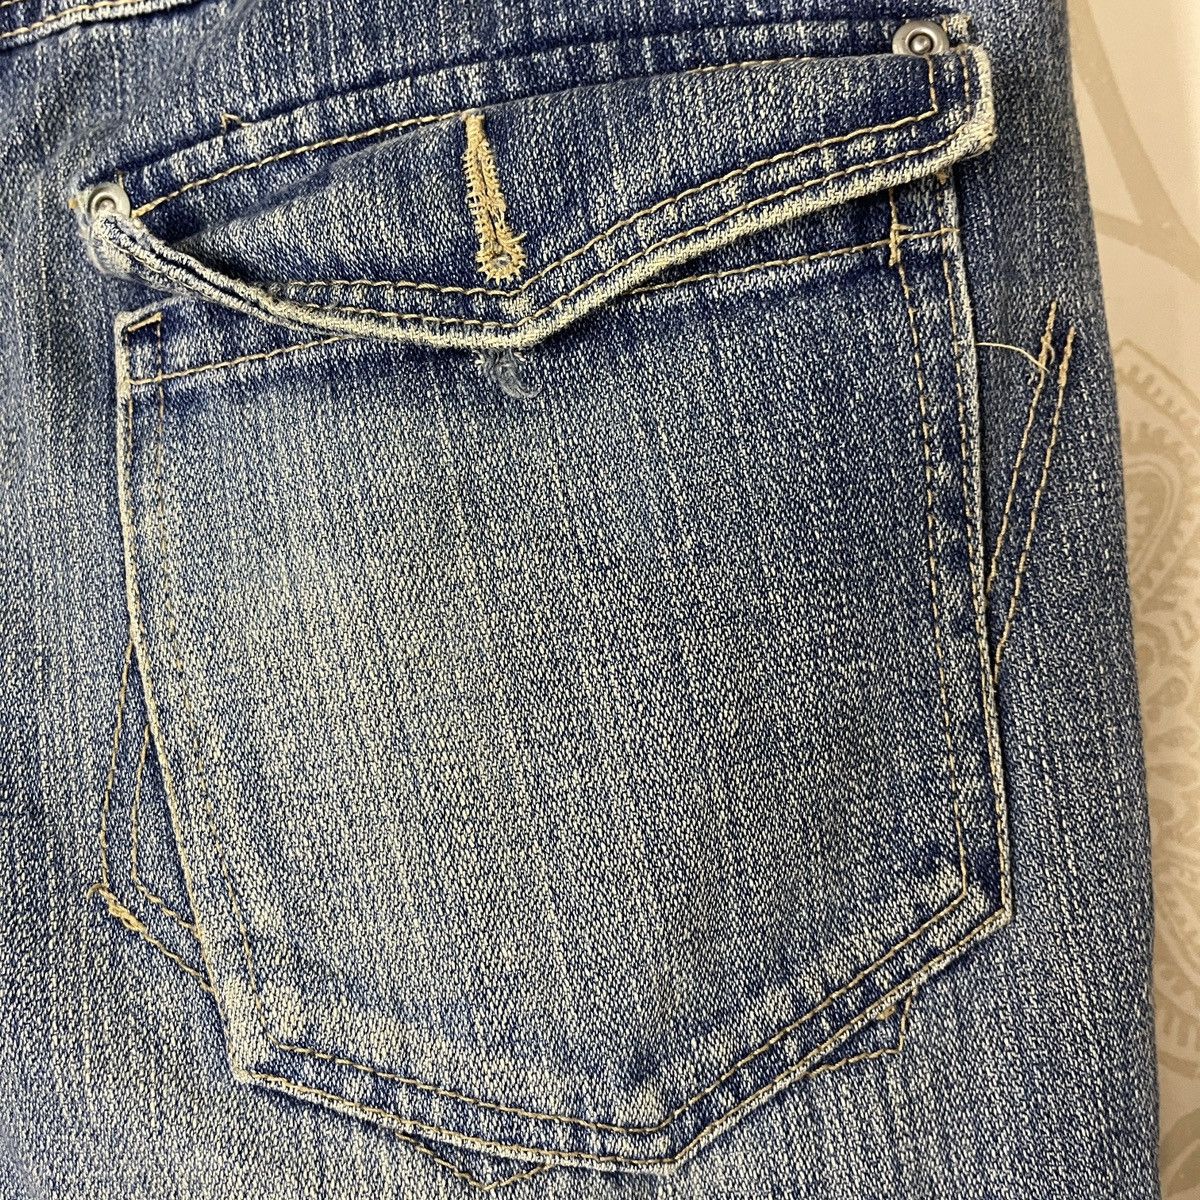 Ripped Three Stones Throw Denim Jeans Avant Garde Pockets - 19